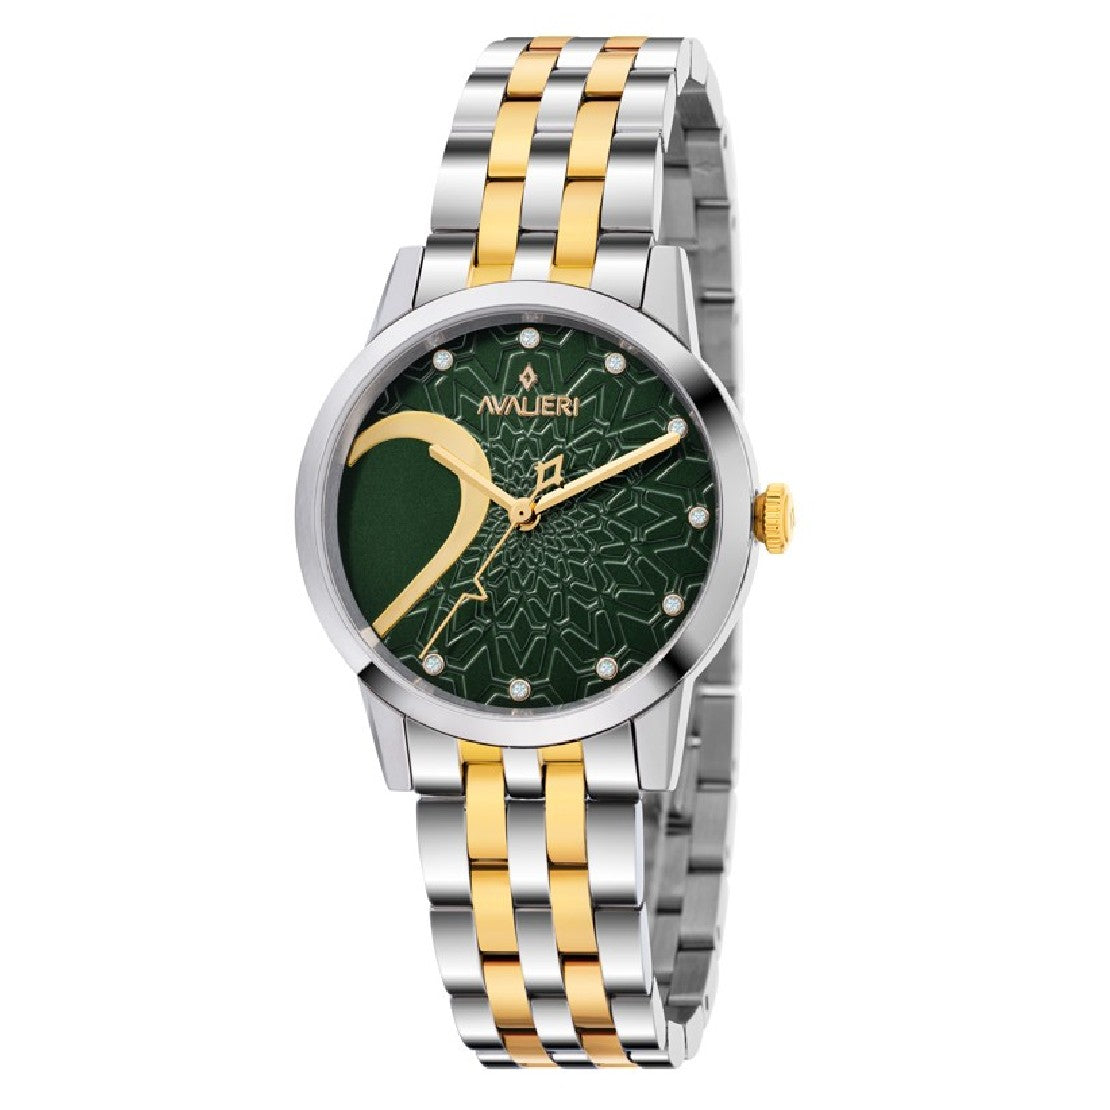 Avalieri Women's Quartz Green Dial Watch - AV-2323B